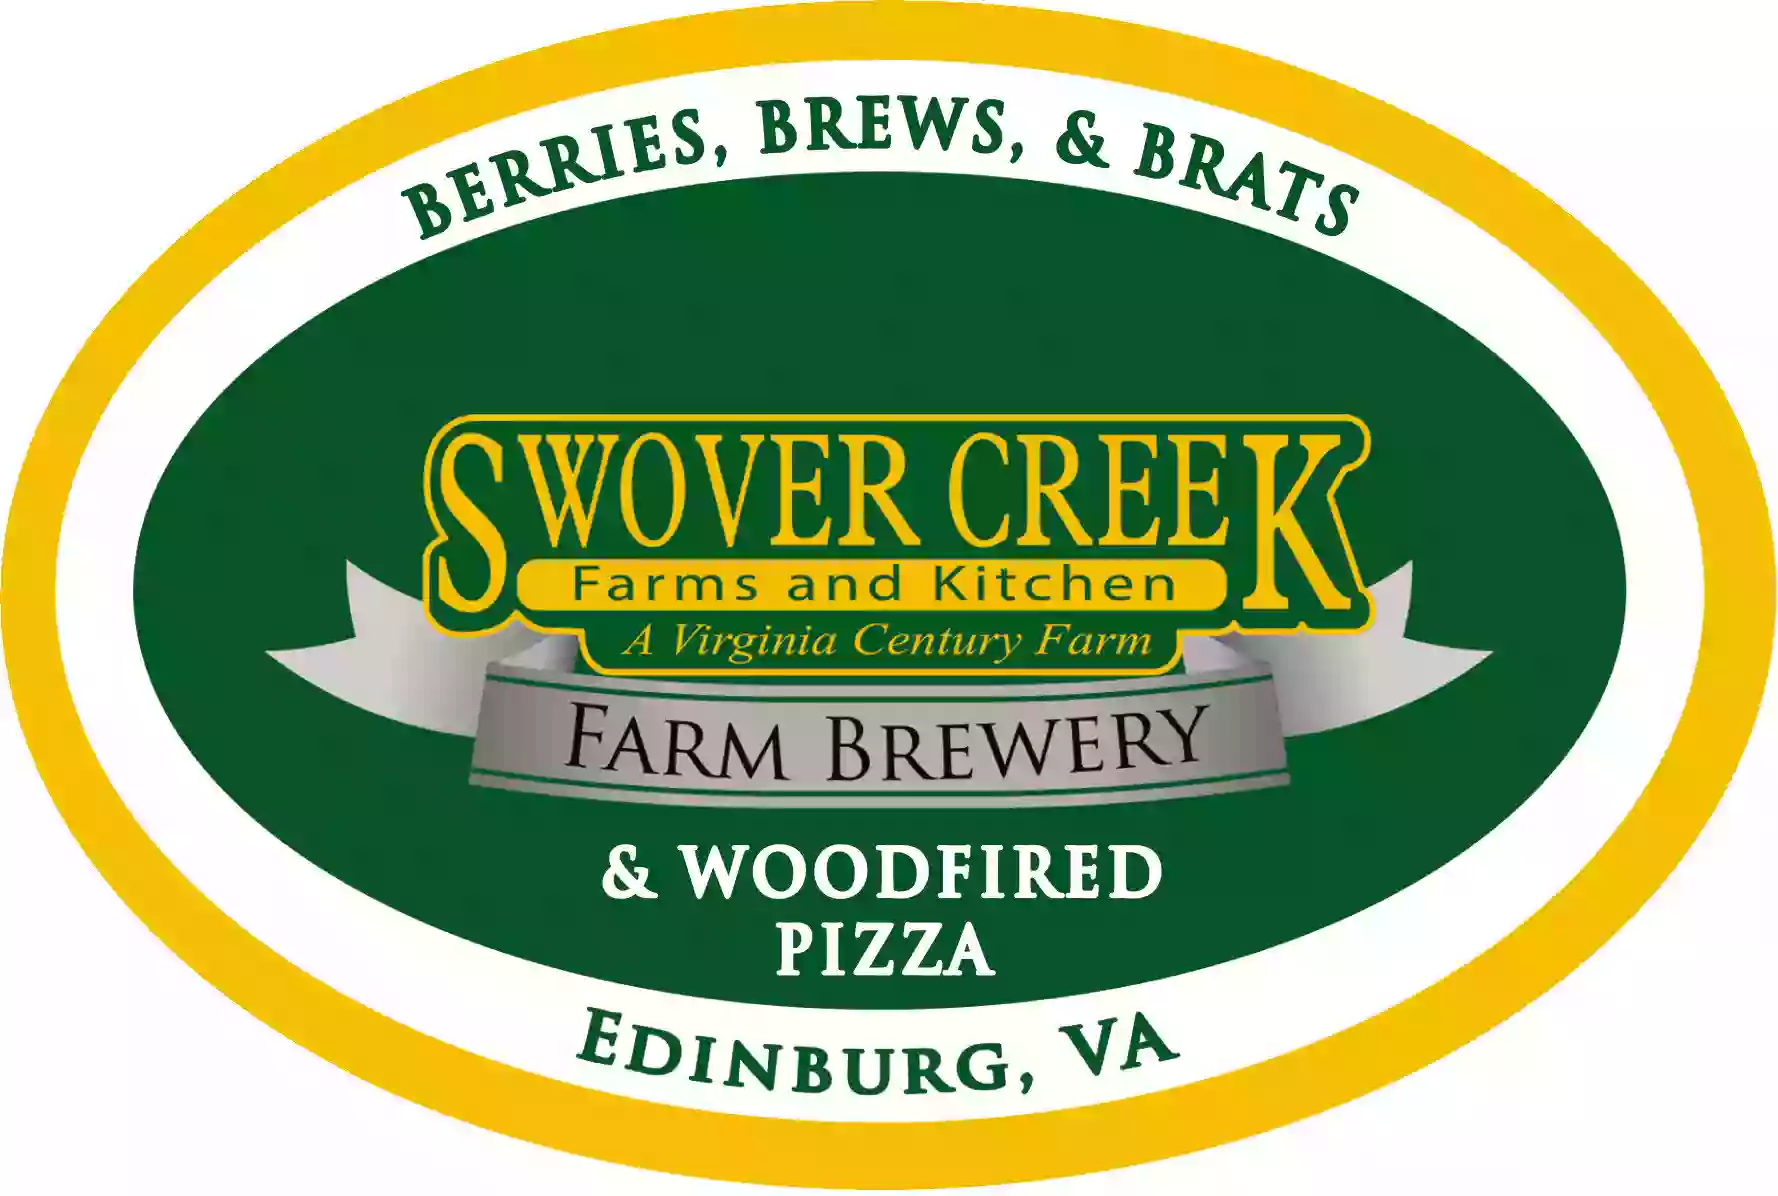 Swover Creek Farm Brewery